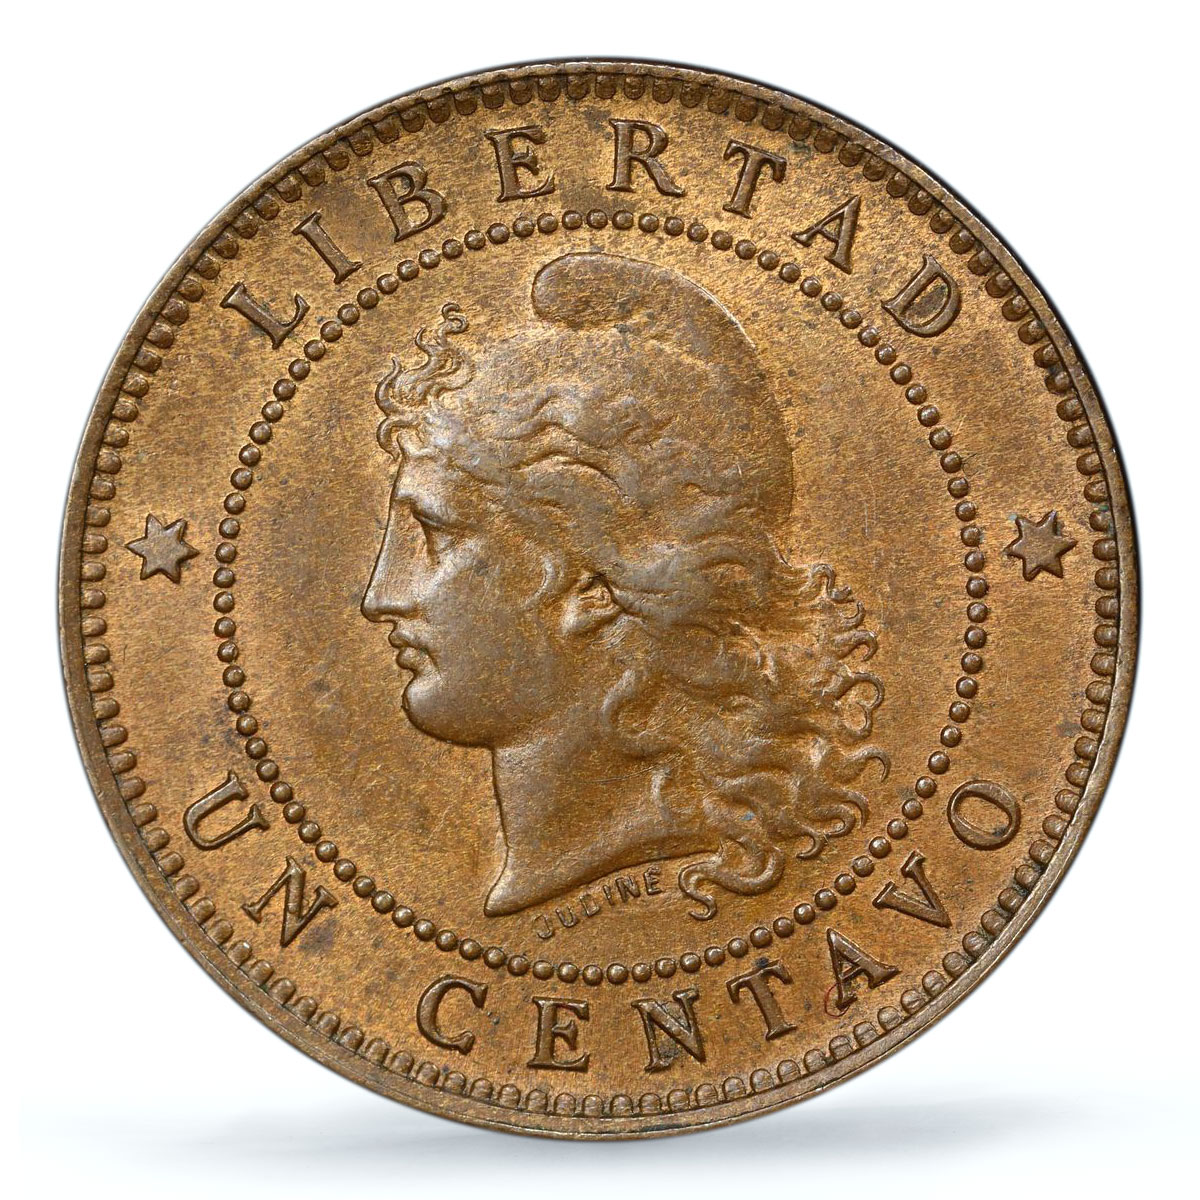 Argentina 1 centavo Regular Coinage Libertad KM-32 MS64 BN PCGS bronze coin 1894